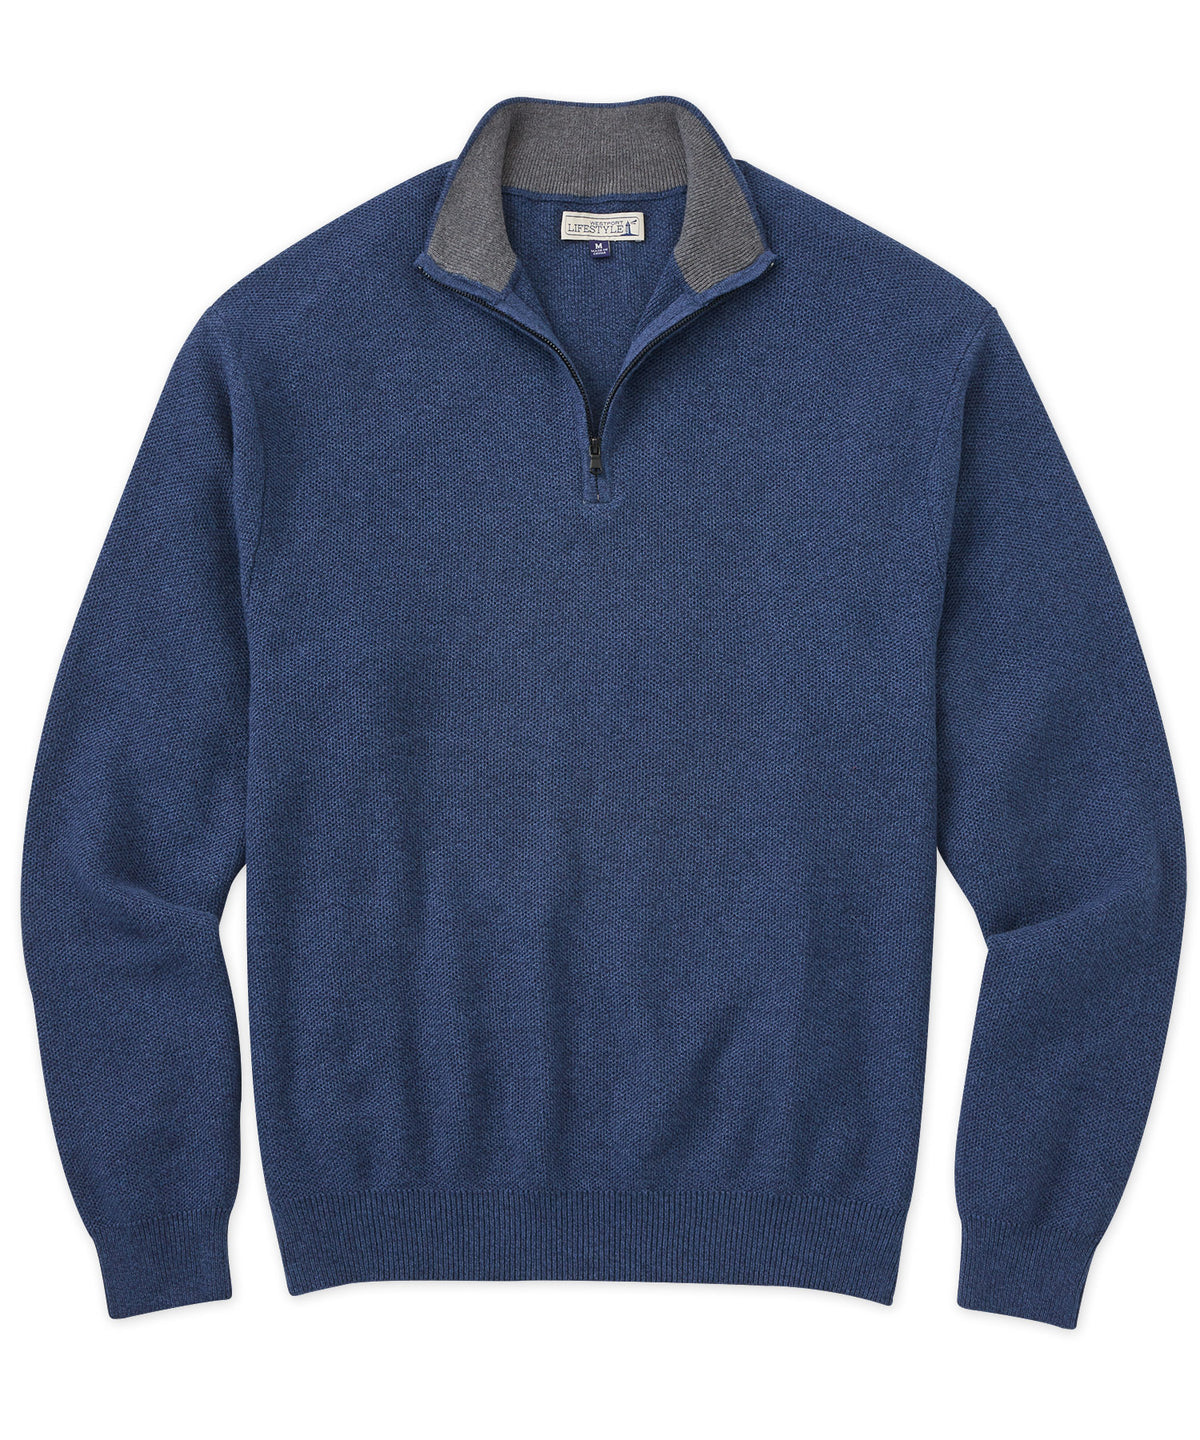 Westport Lifestyle Cotton Cashmere Quarter-Zip Pullover, Big & Tall